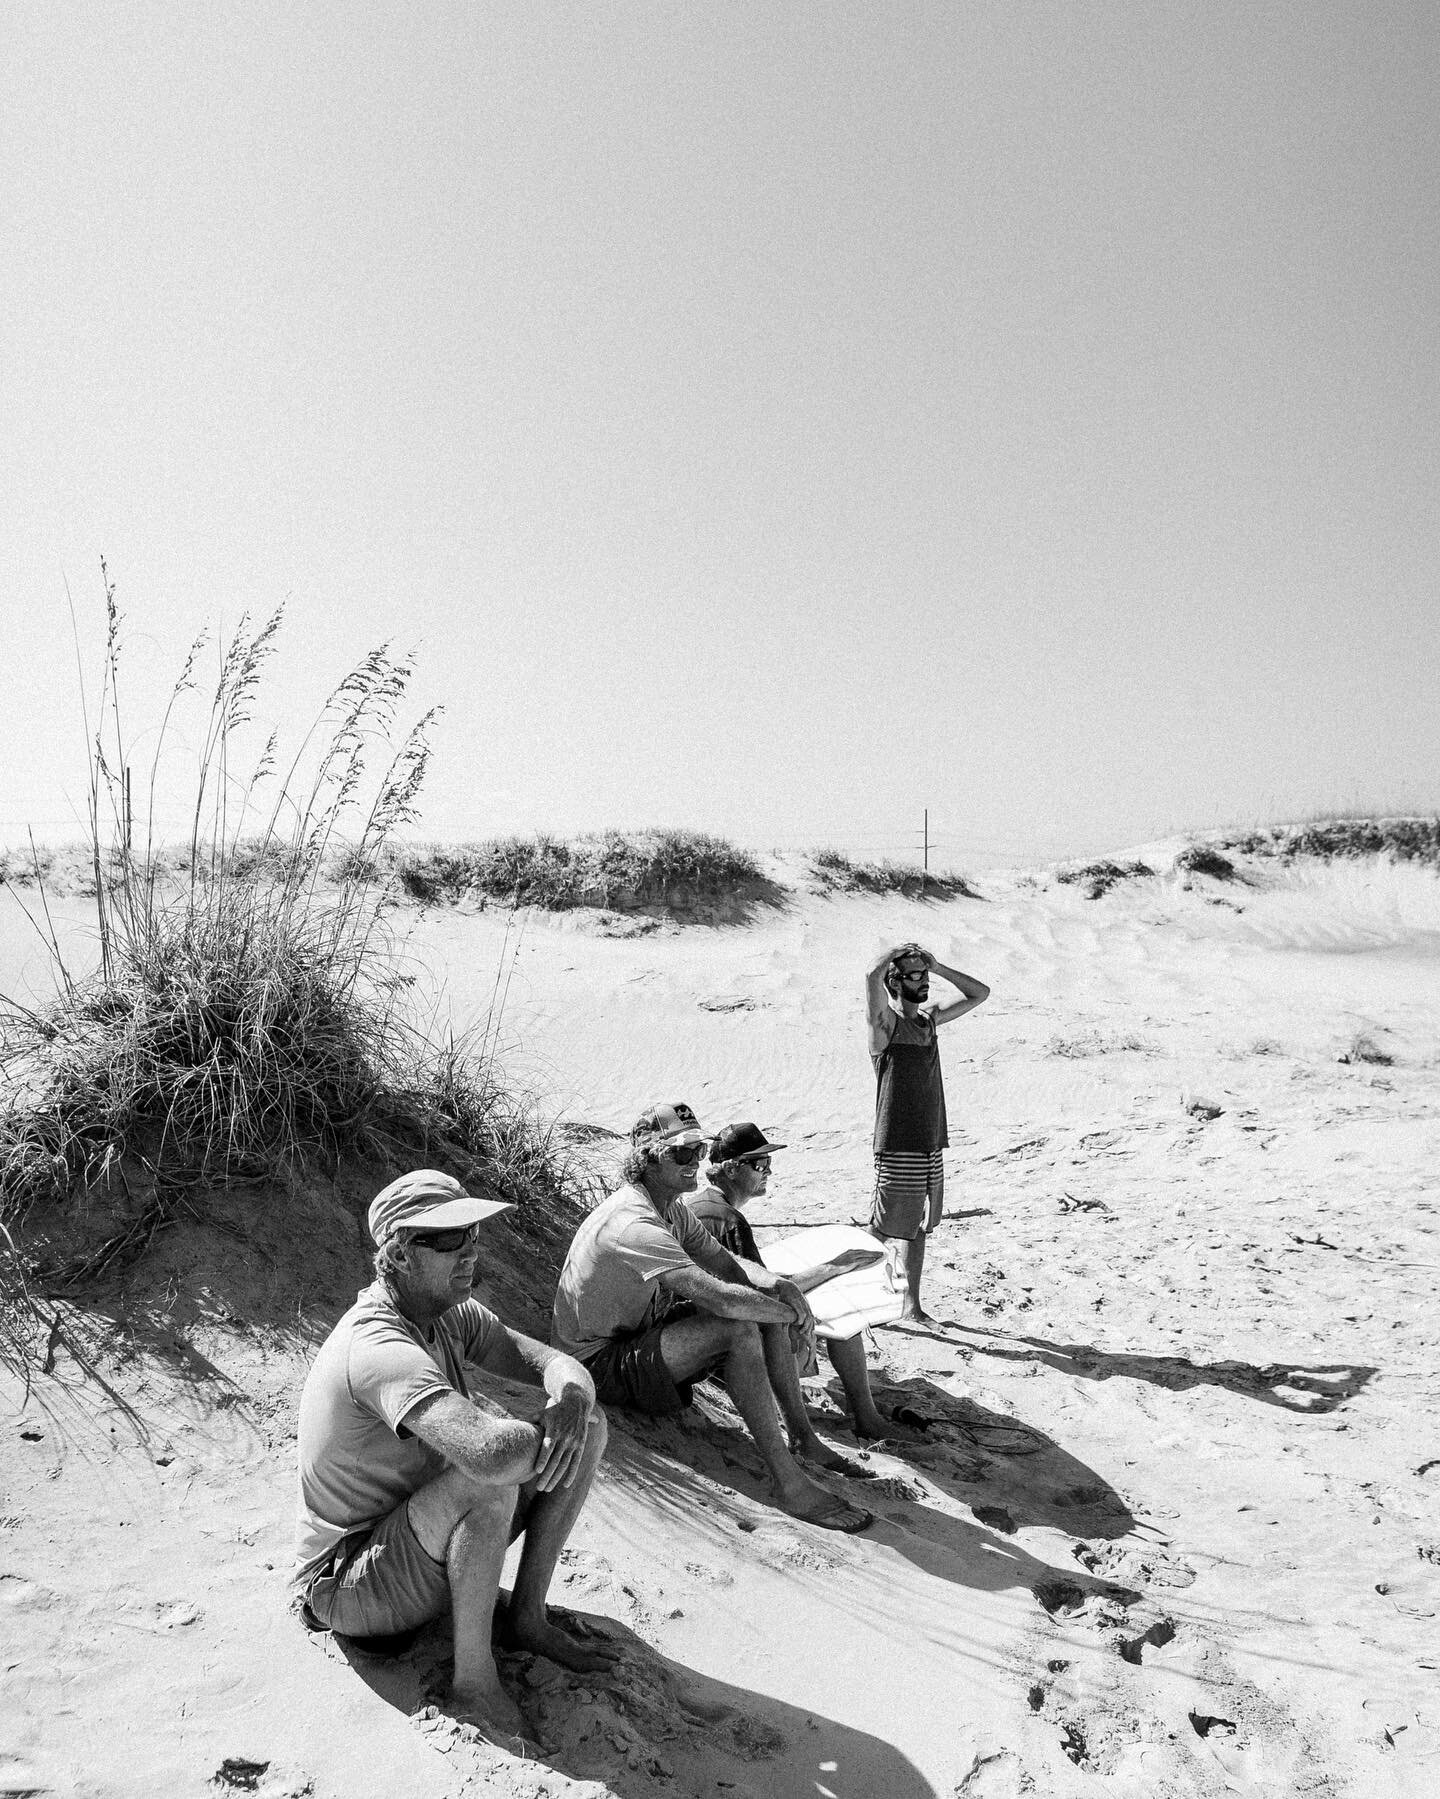 The endless pursuit of stoke. Just another day in paradise on a magical sandbar. 
#nofunhere #supportyourlocalweirdos #rideboardshavefun #surfallday #burnmagazine #apakmedia